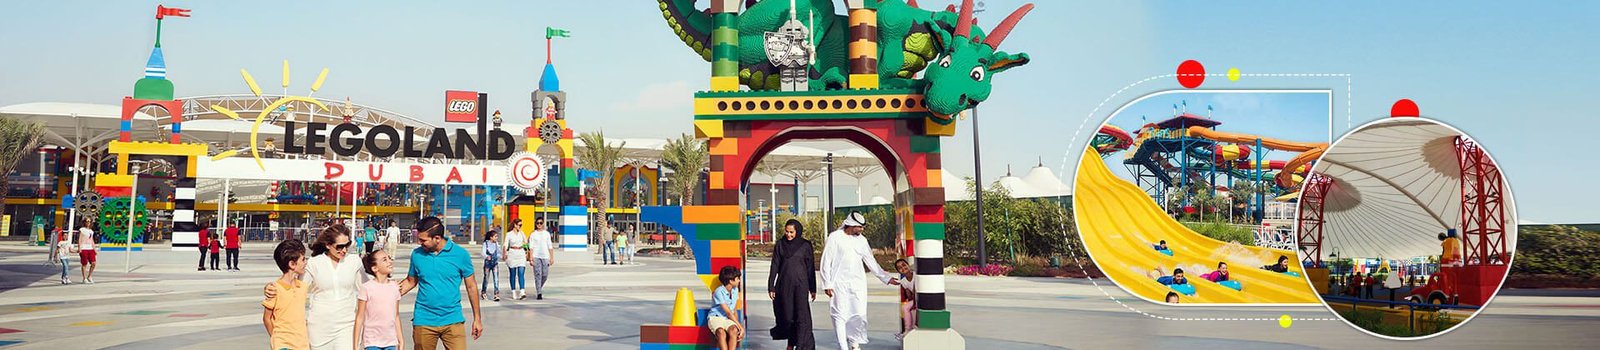 Legoland Theme Park Dubai